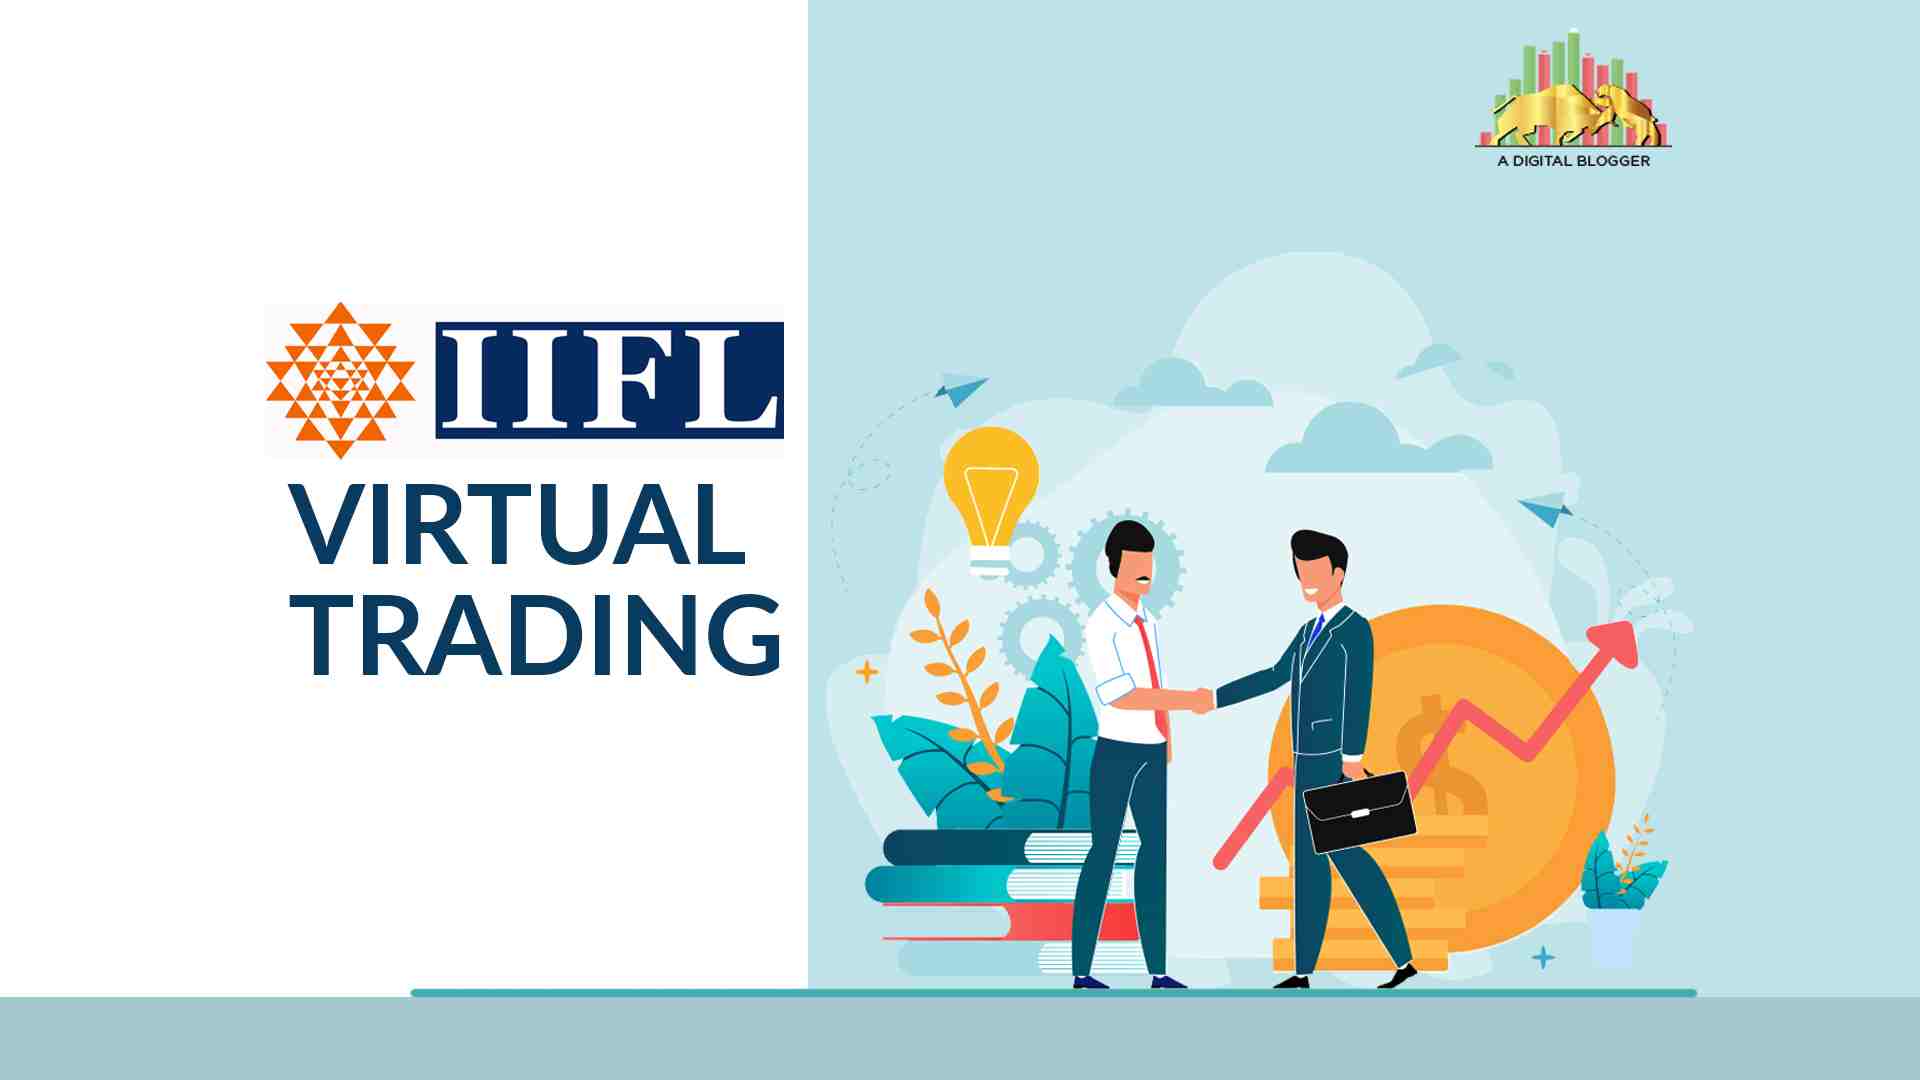 IIFL Virtual Trading | Portfolio, Features, Types, Usage